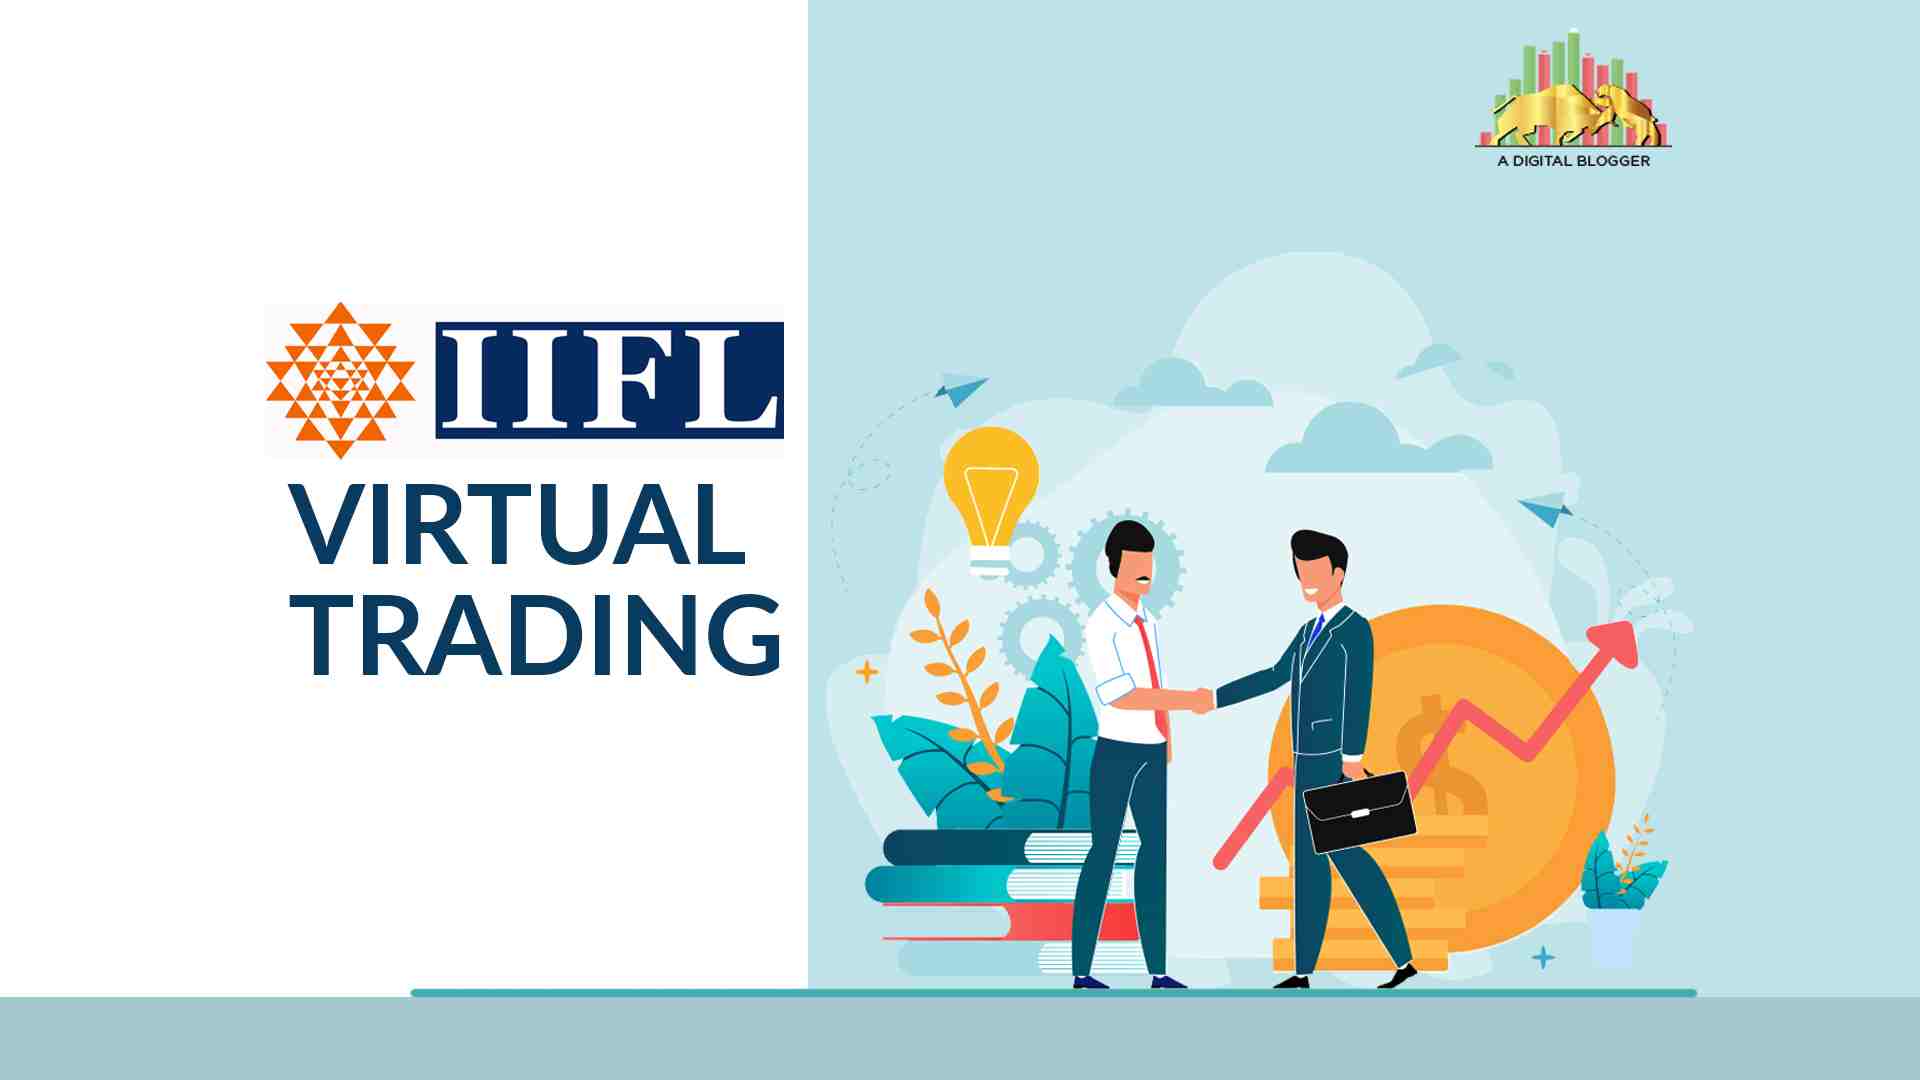 IIFL Virtual Trading | Portfolio, Features, Types, Usage